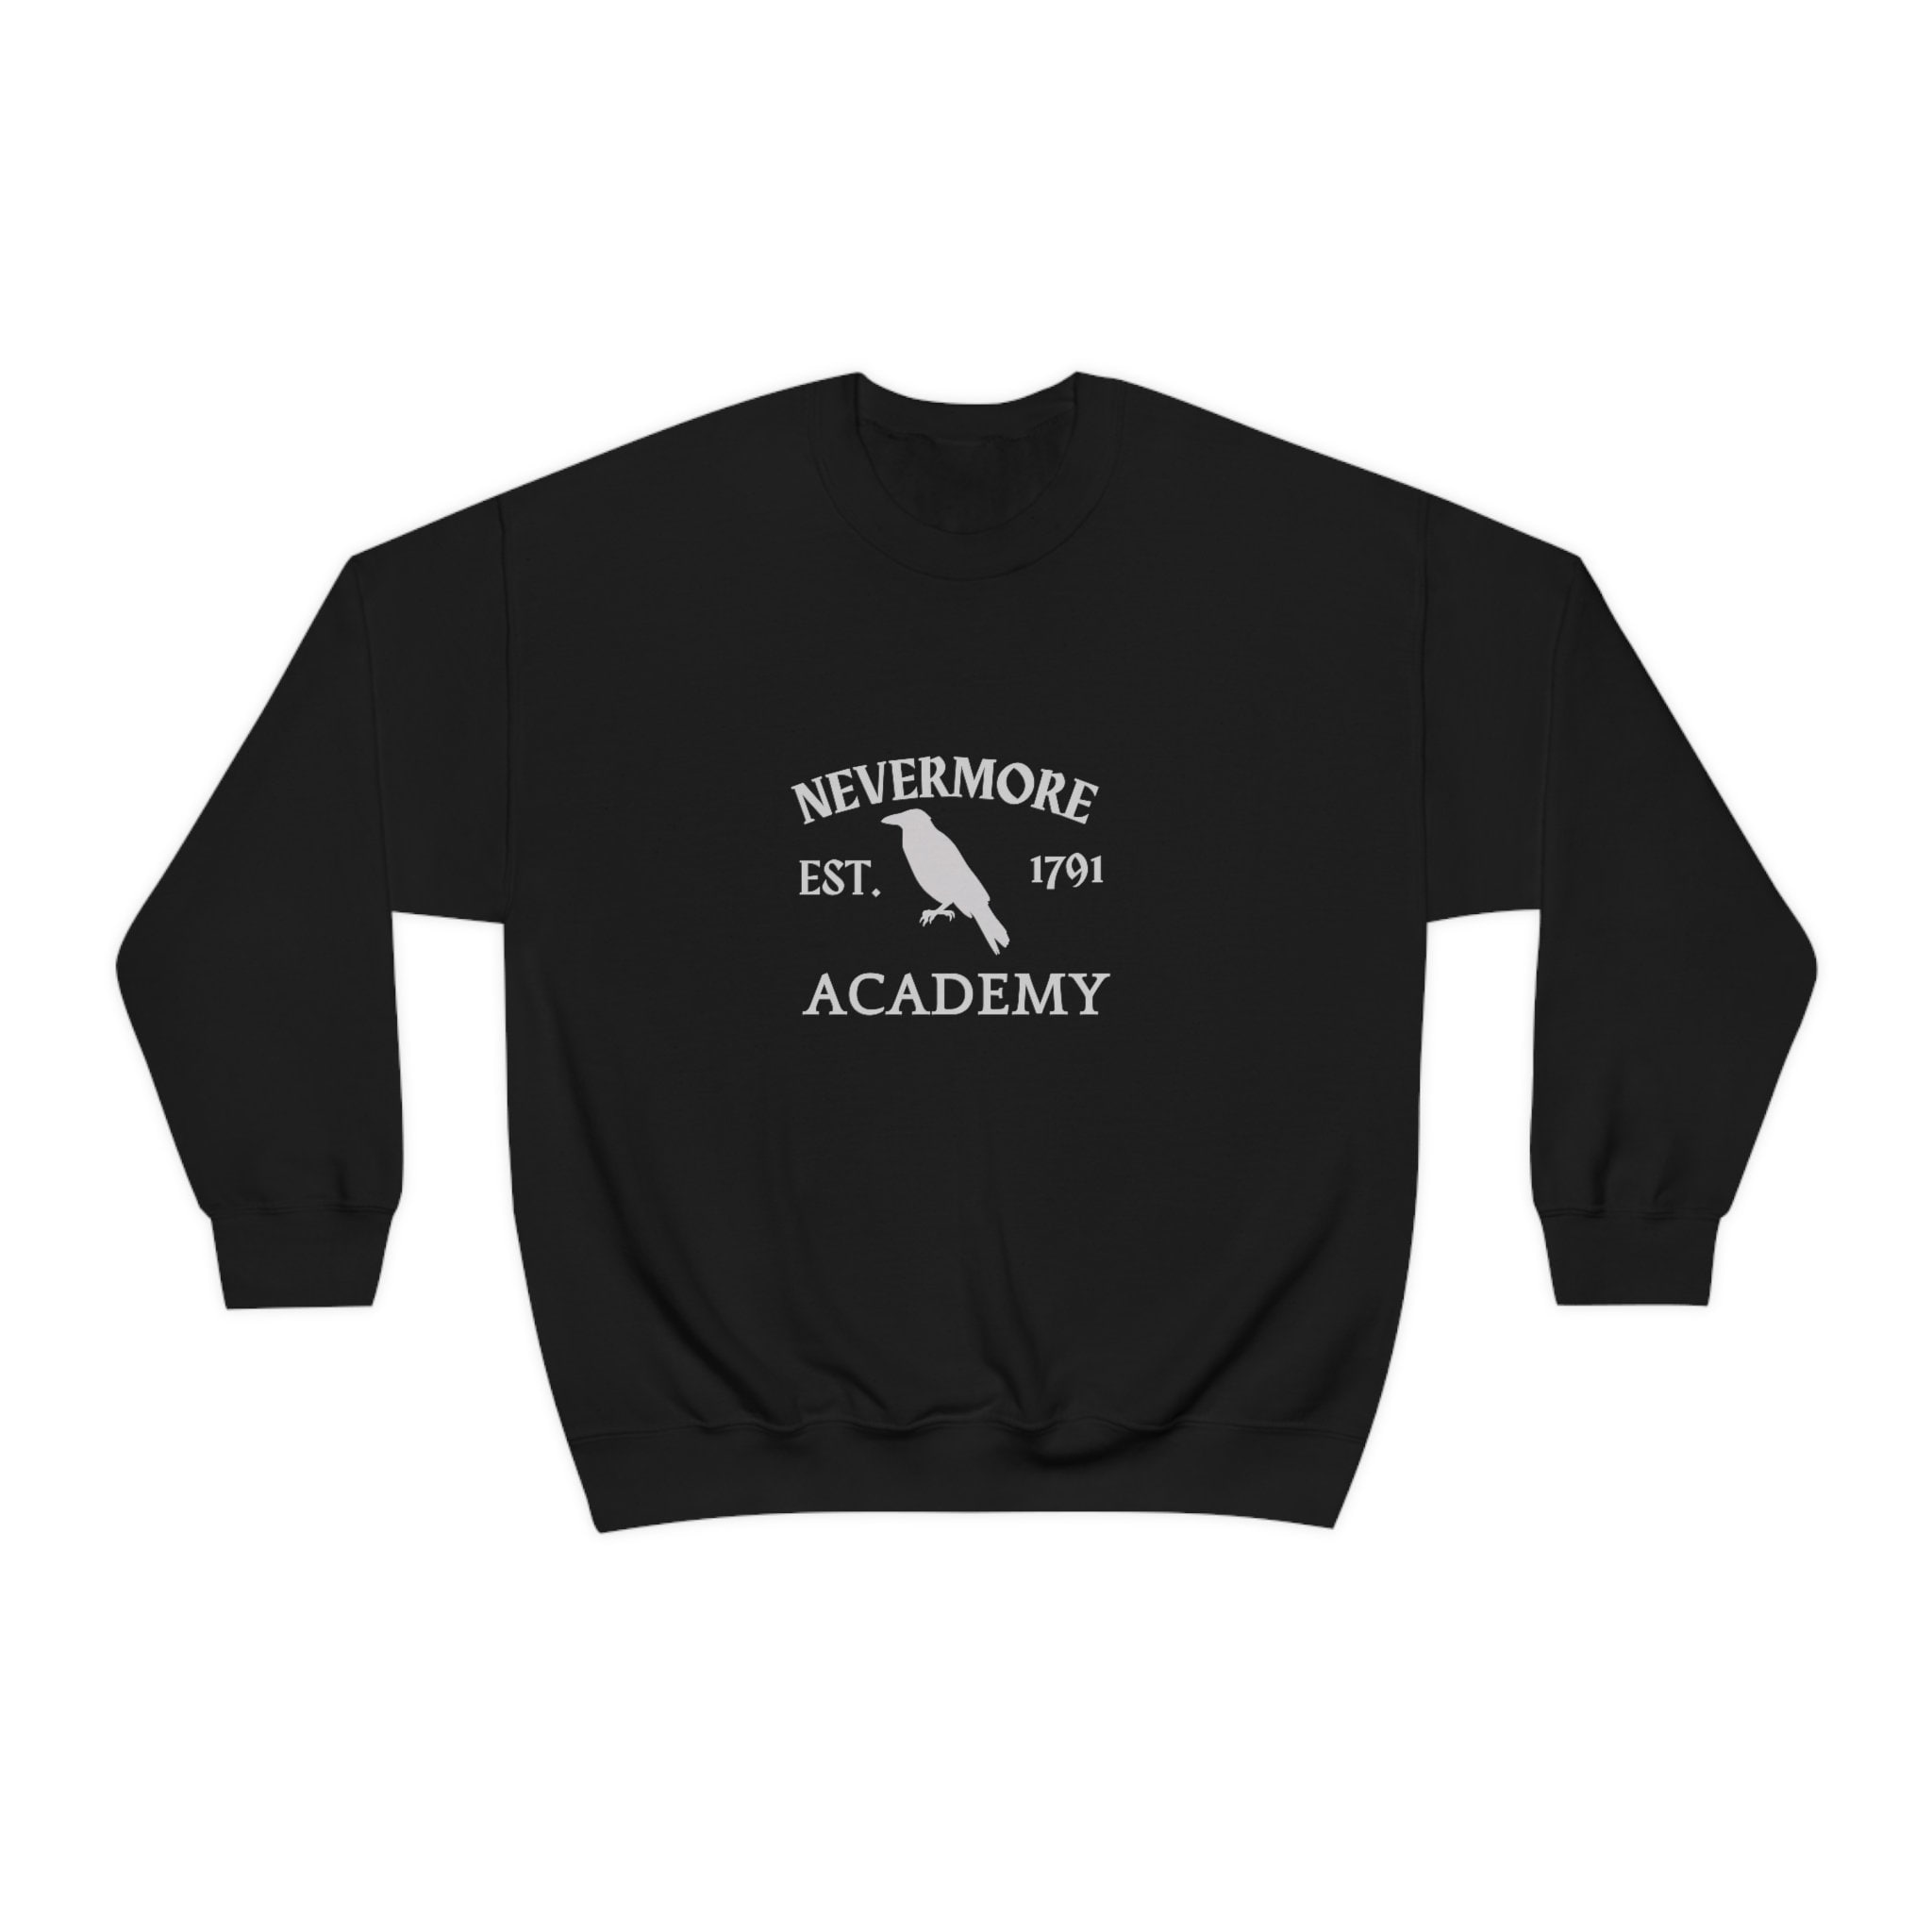 Discover Nevermore Academy Sweatshirt, Wednesday Addams, Dark Academia Sweatshirt , Vintage Academy Shirt, Wednesday Merch, Wednesday Sweatshirt